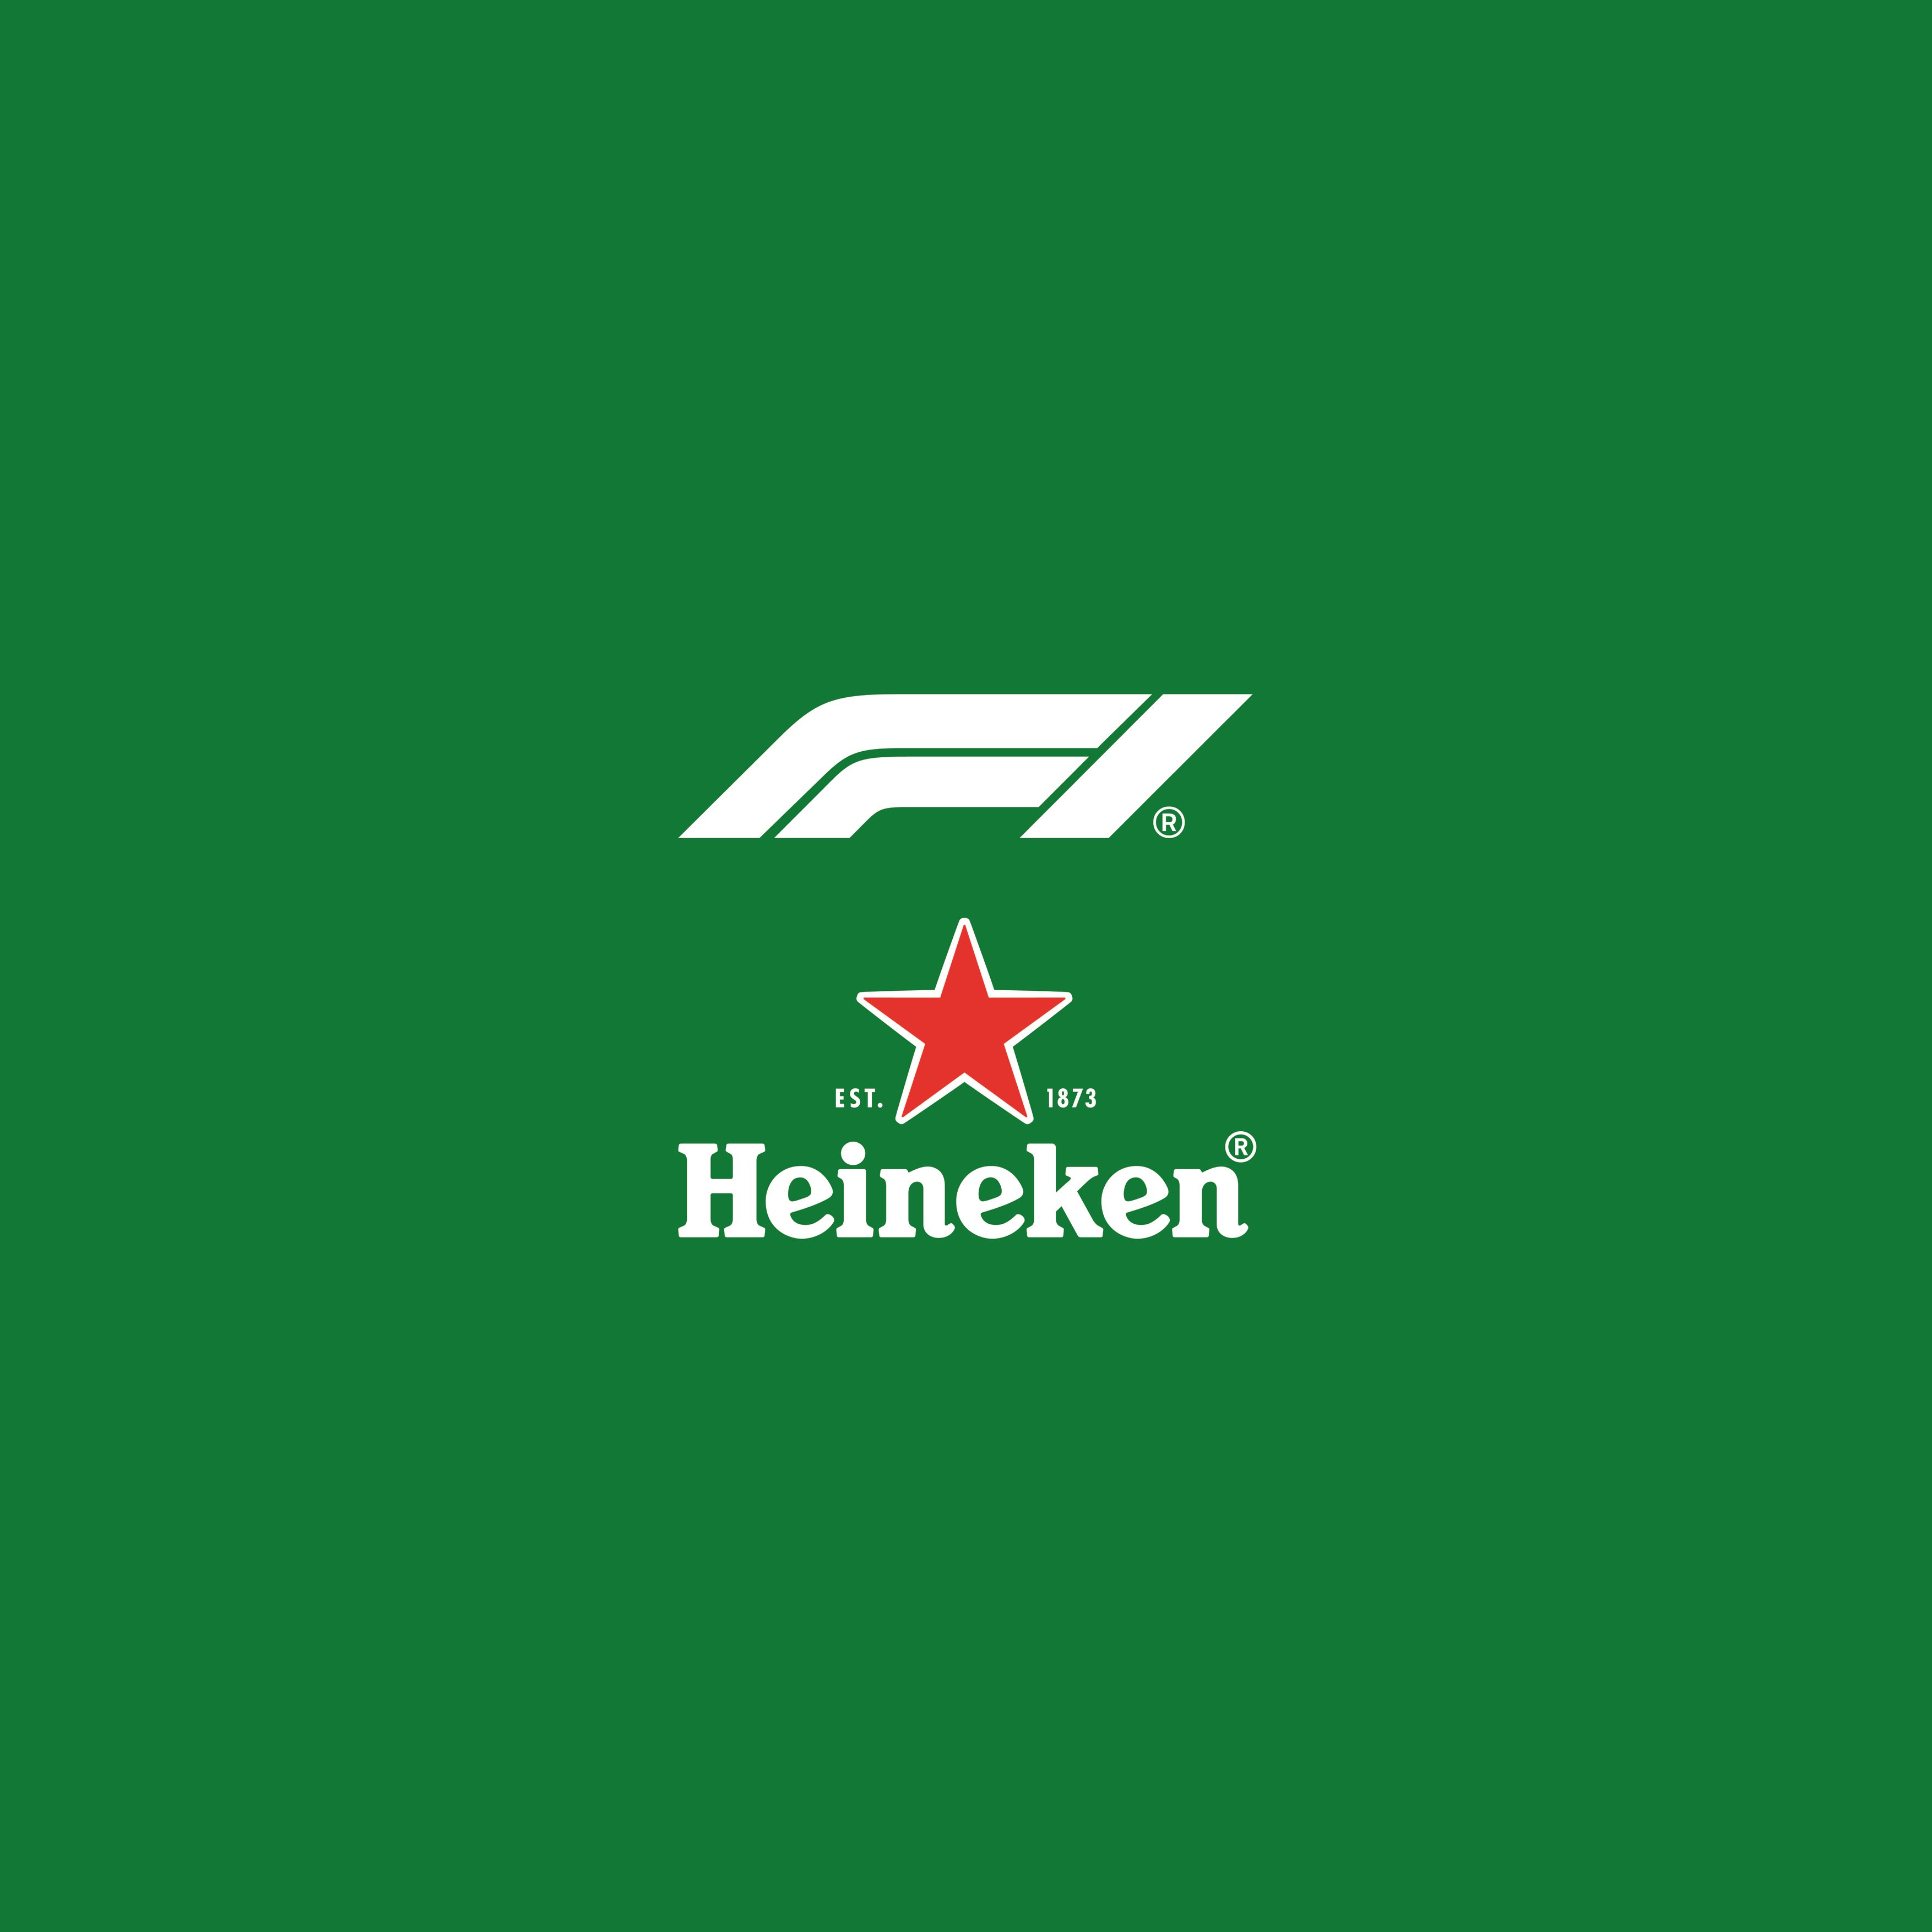 F1 Heineken Composite Logo Stacked On Green Fc